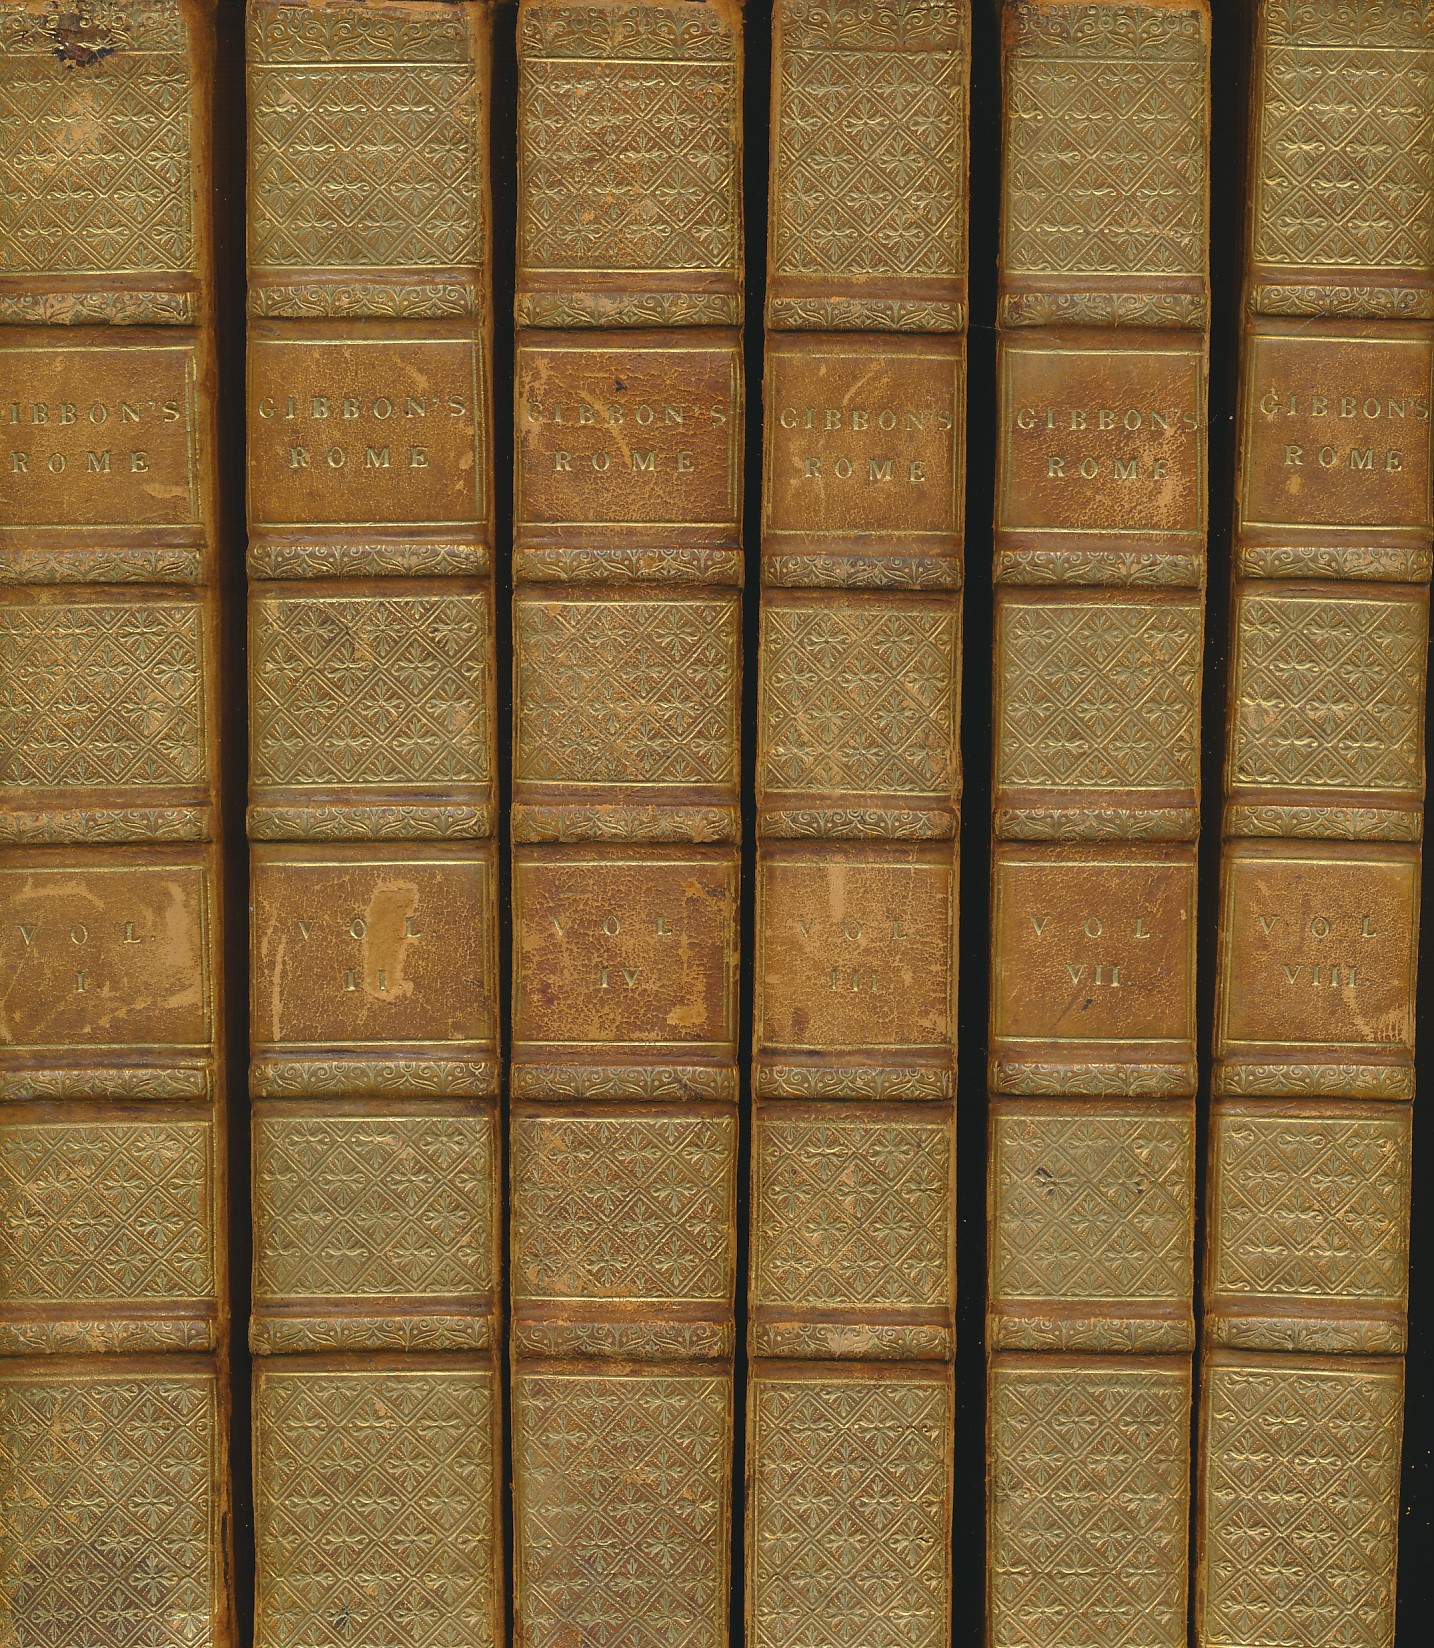 The Decline and Fall of the Roman Empire. 12 volume set. Lackington & Allen edition. 1815.